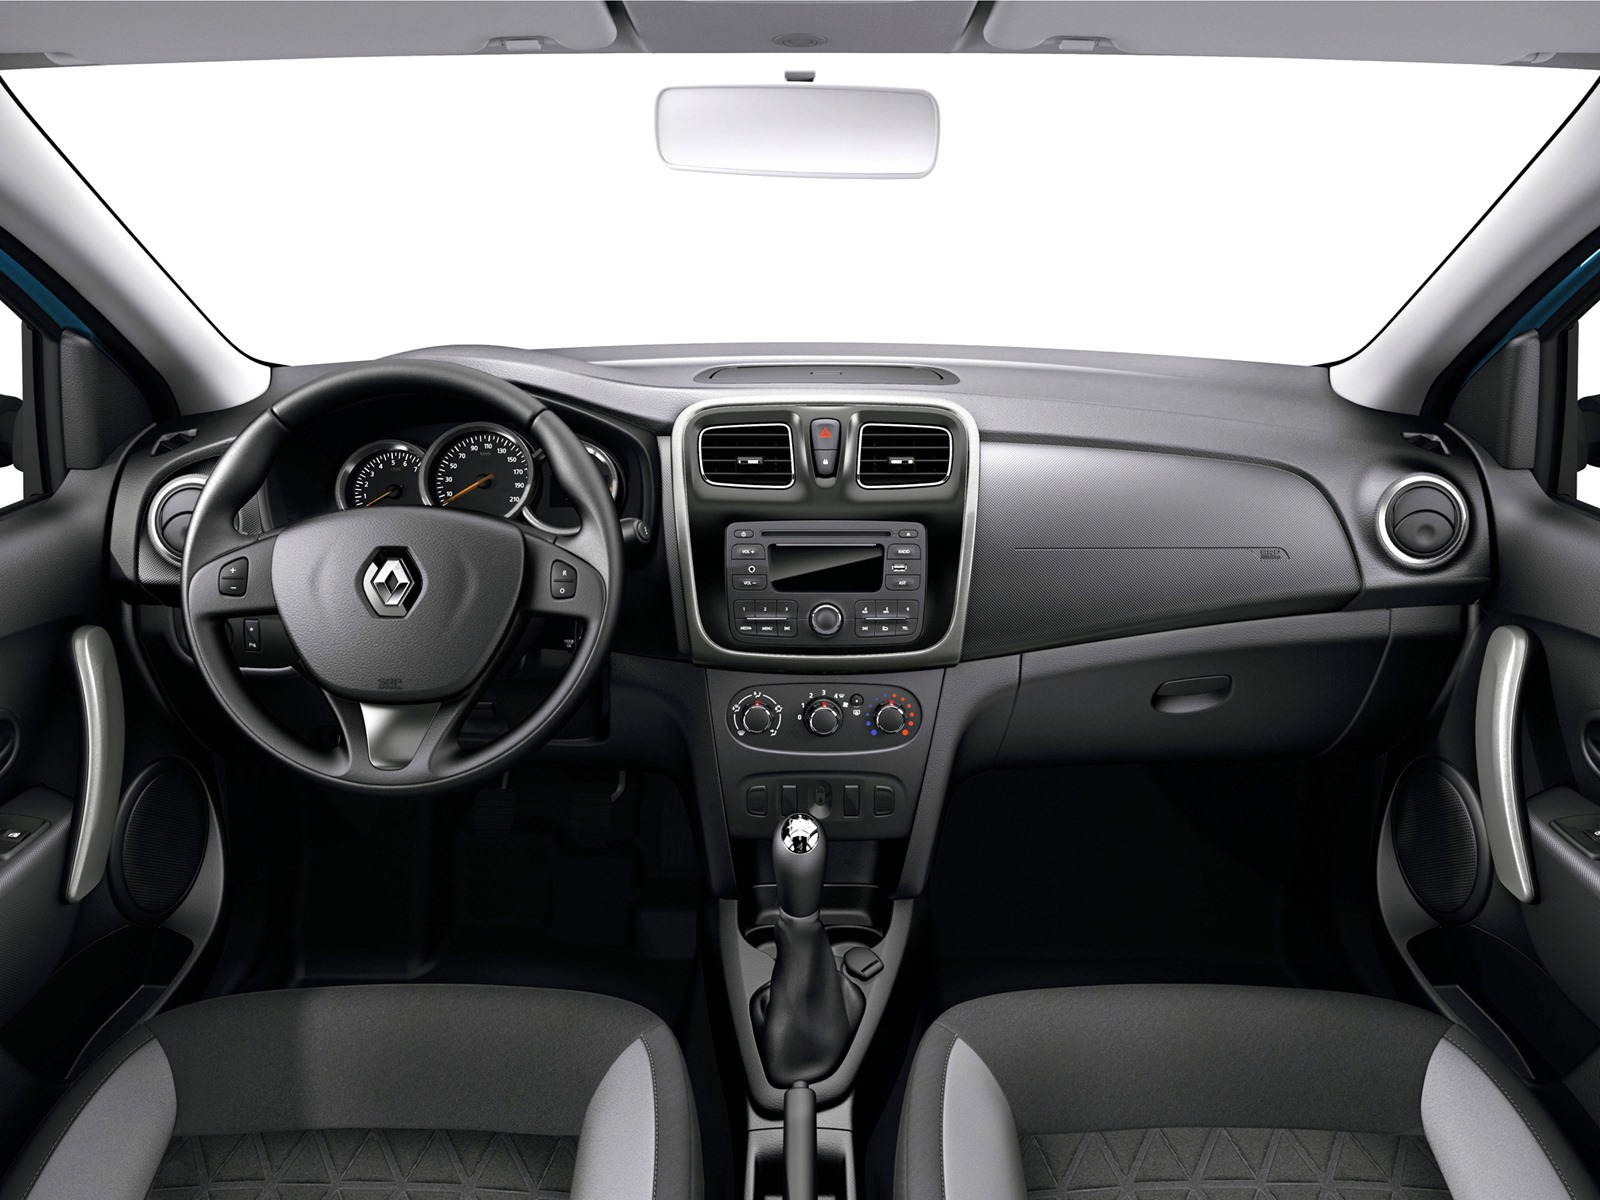 2014 Renault Logan and Sandero interior